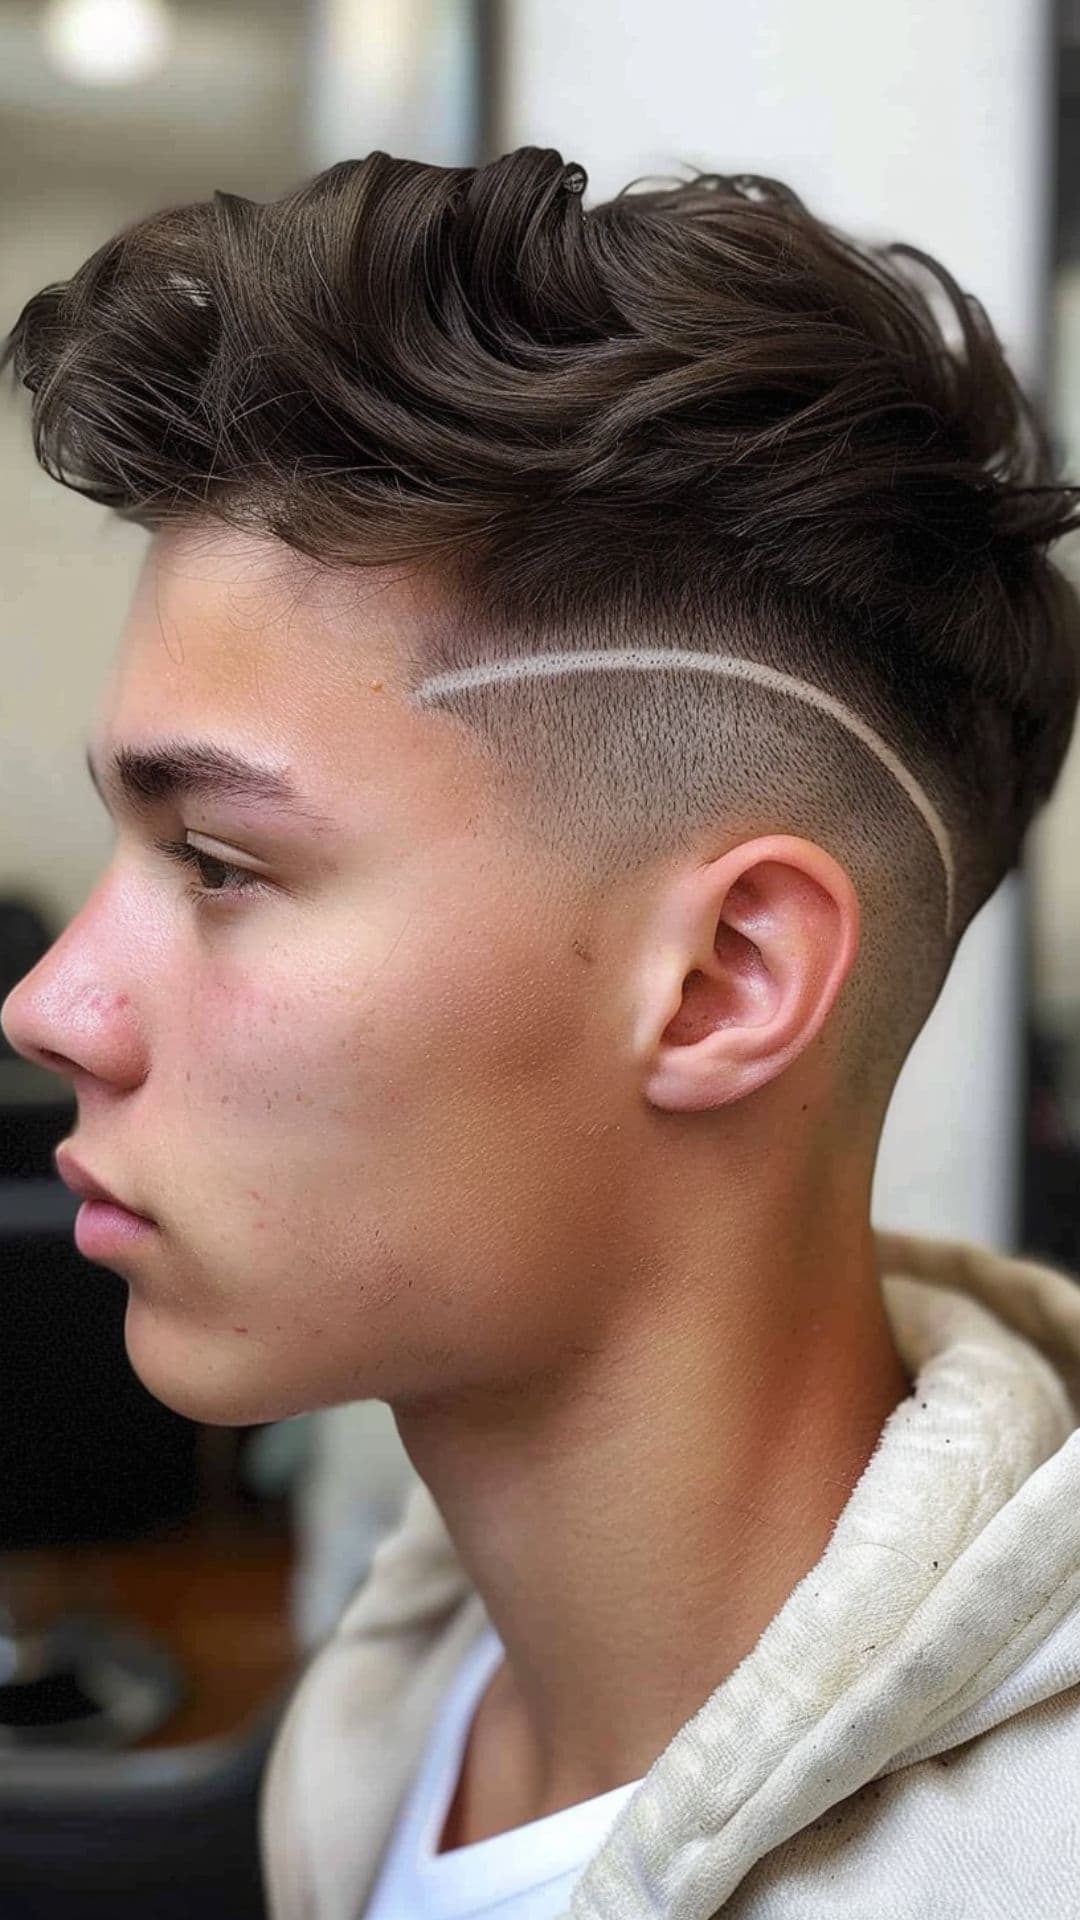 A man modelling a disconnected undercut hair.